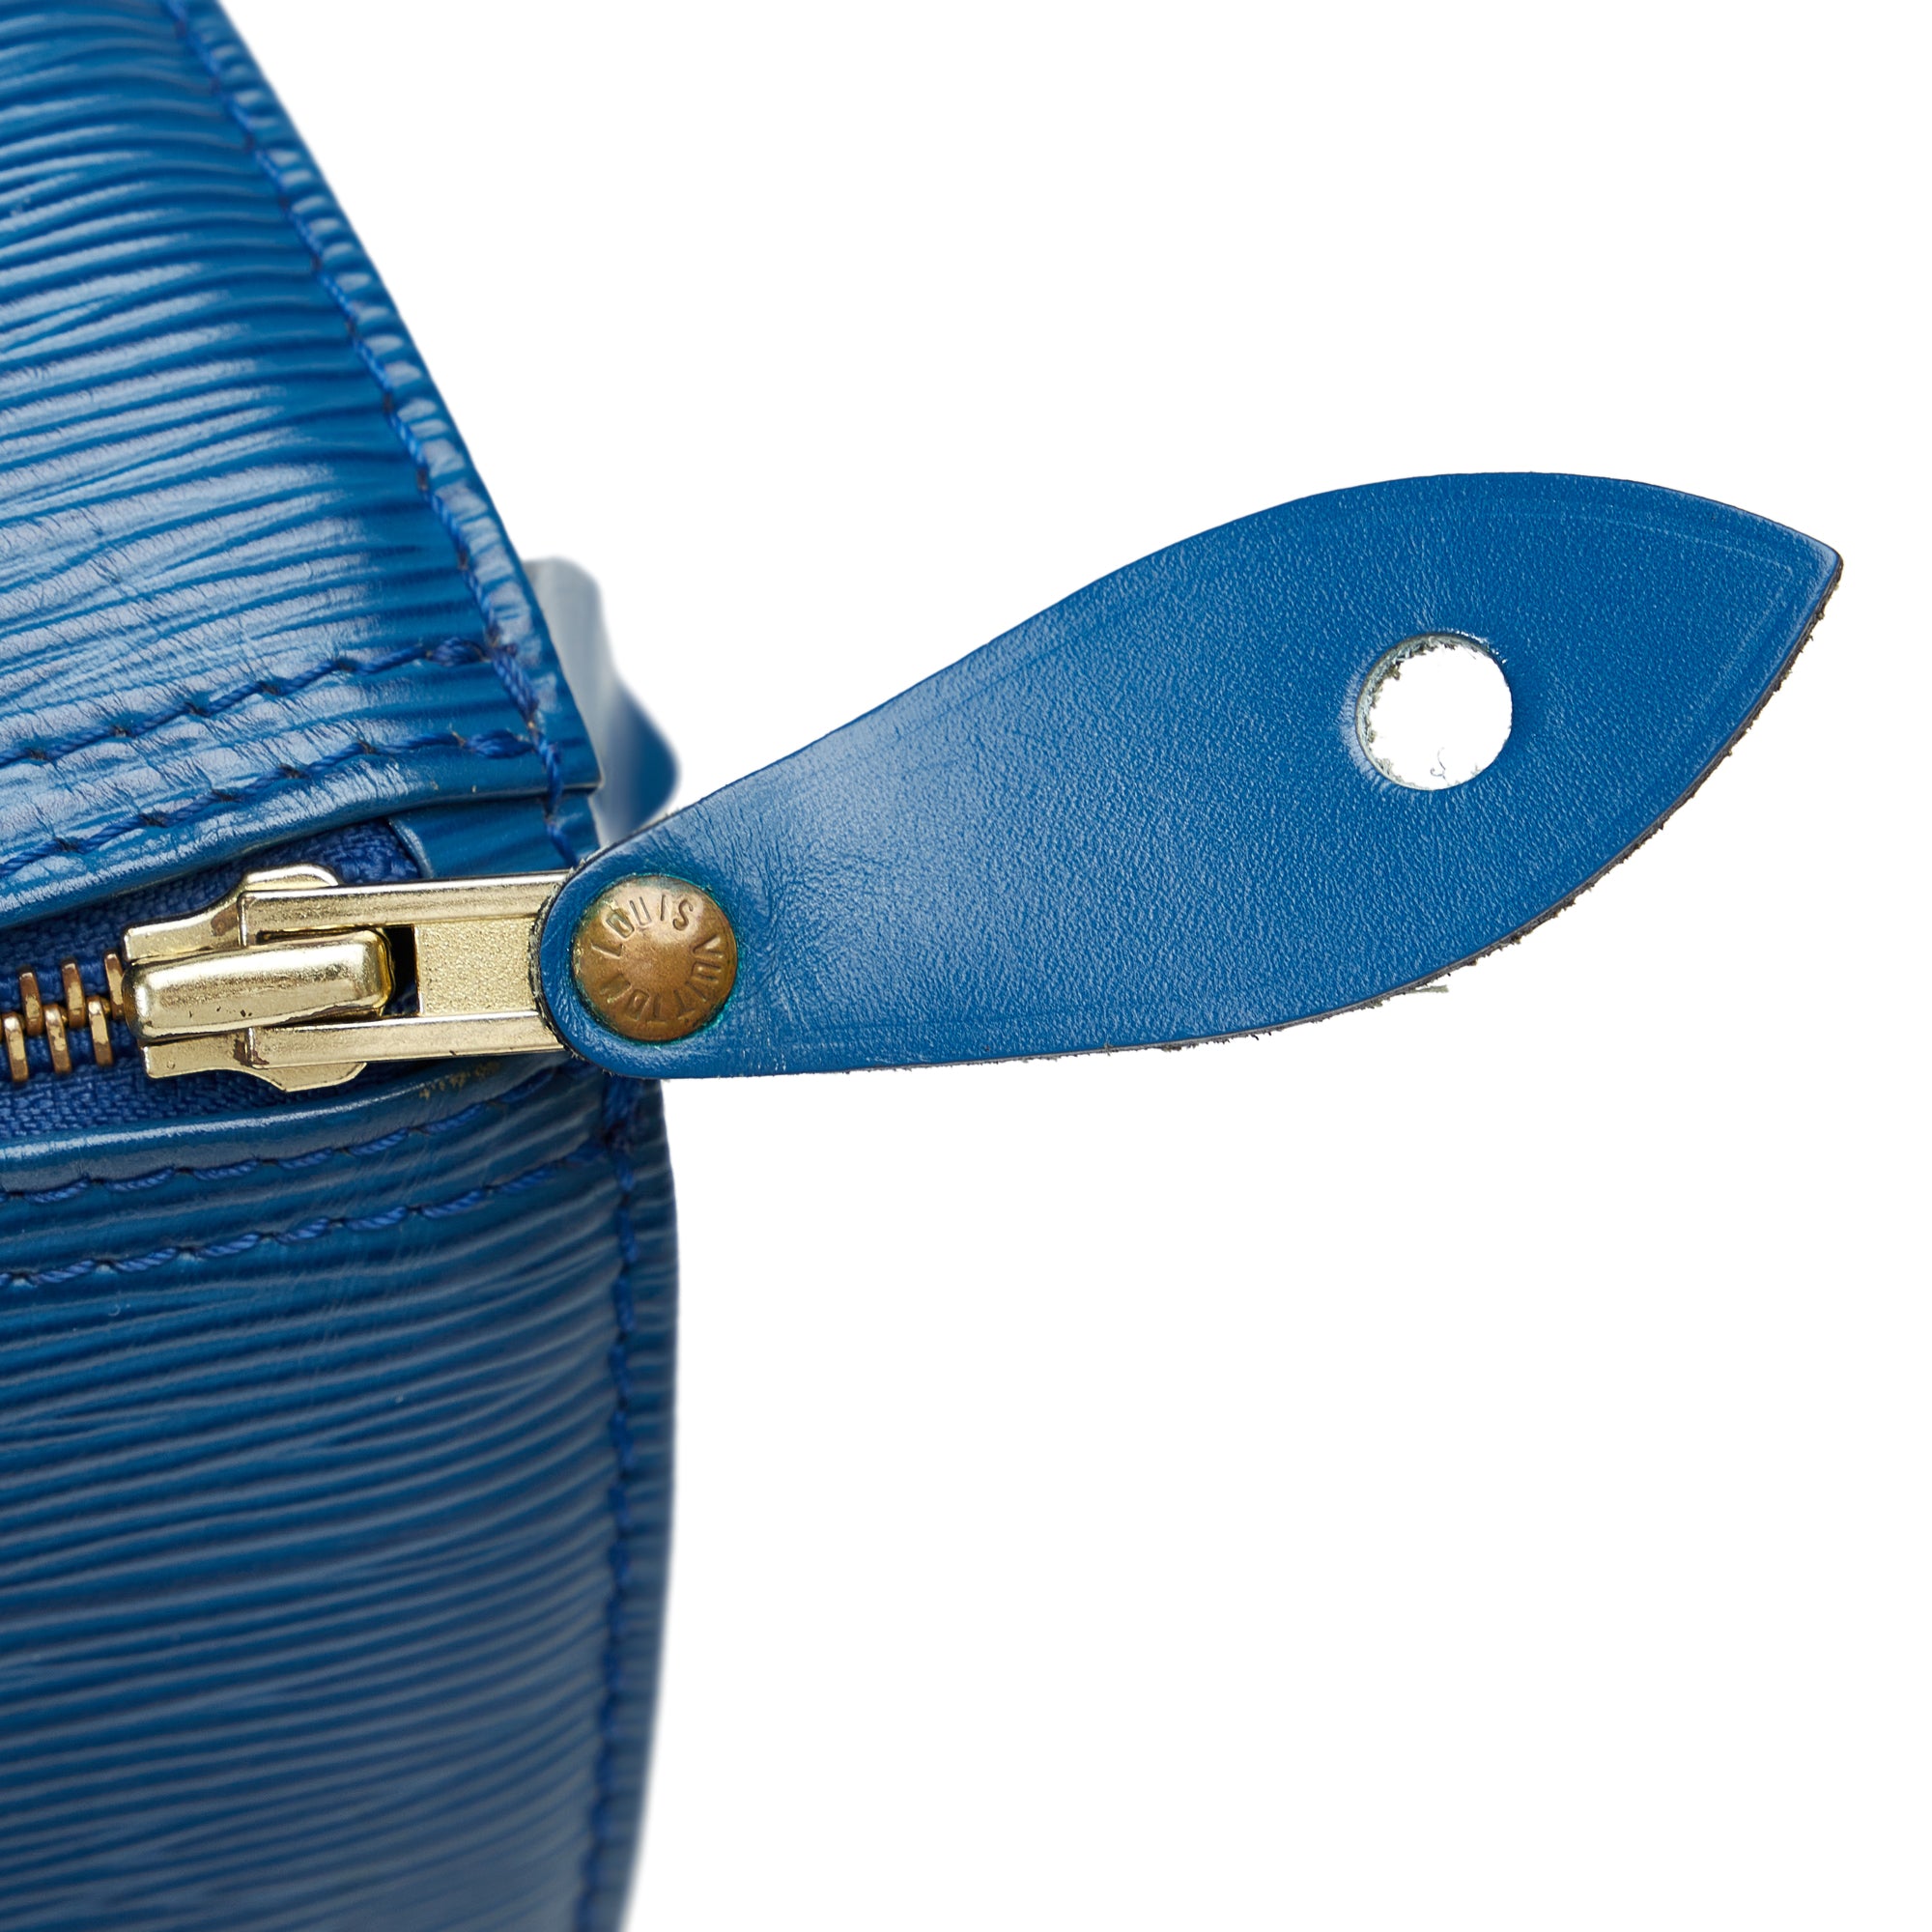 Blue Louis Vuitton Epi Speedy 30 Boston Bag – Designer Revival